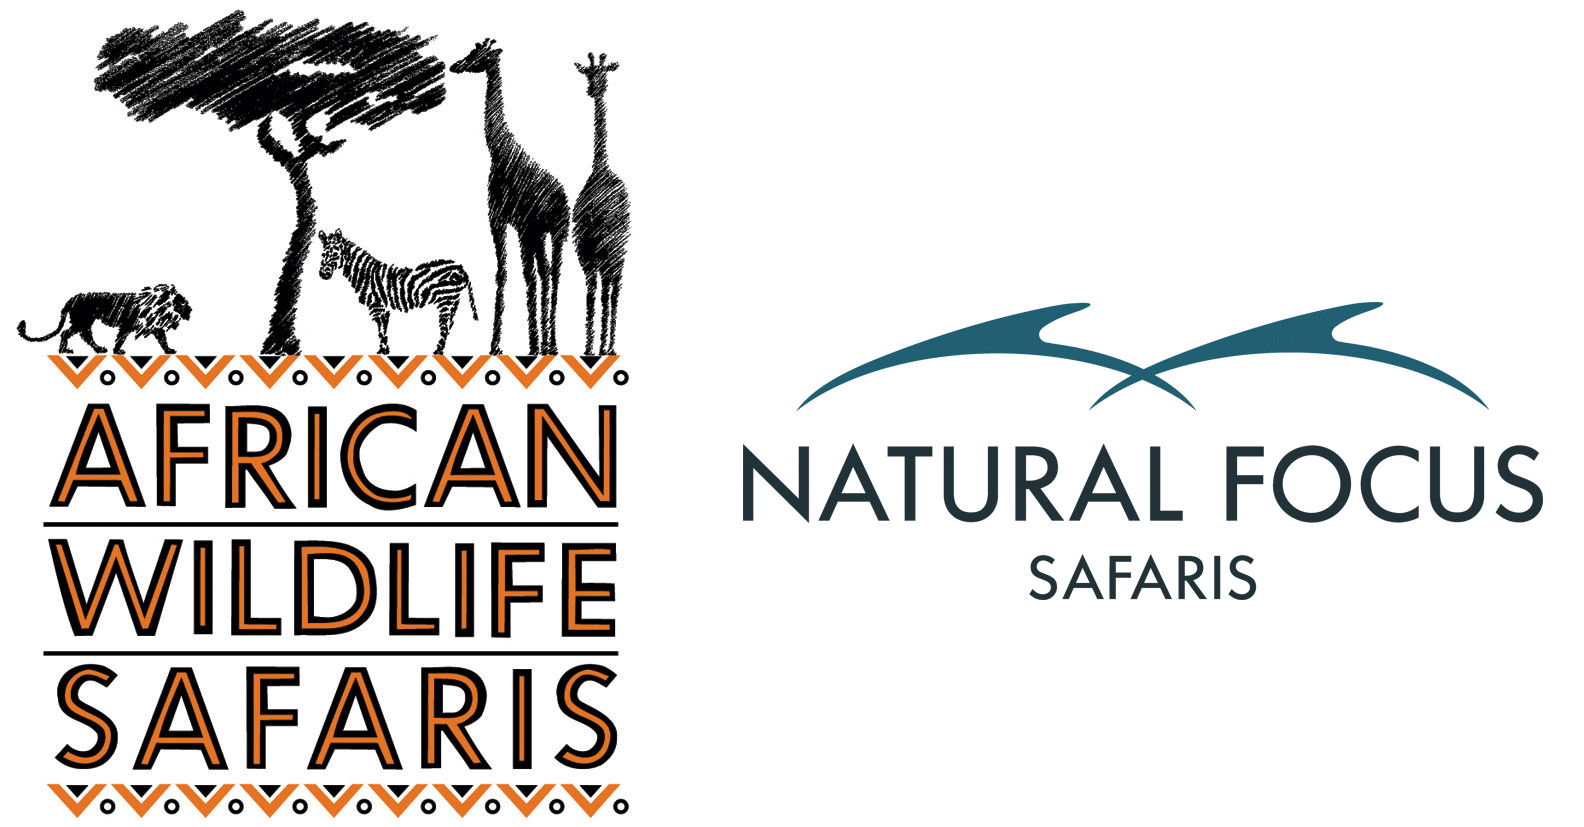 Wildlife Safari Logo - African Wildlife Safaris & Natural Focus Safaris Made Journeys